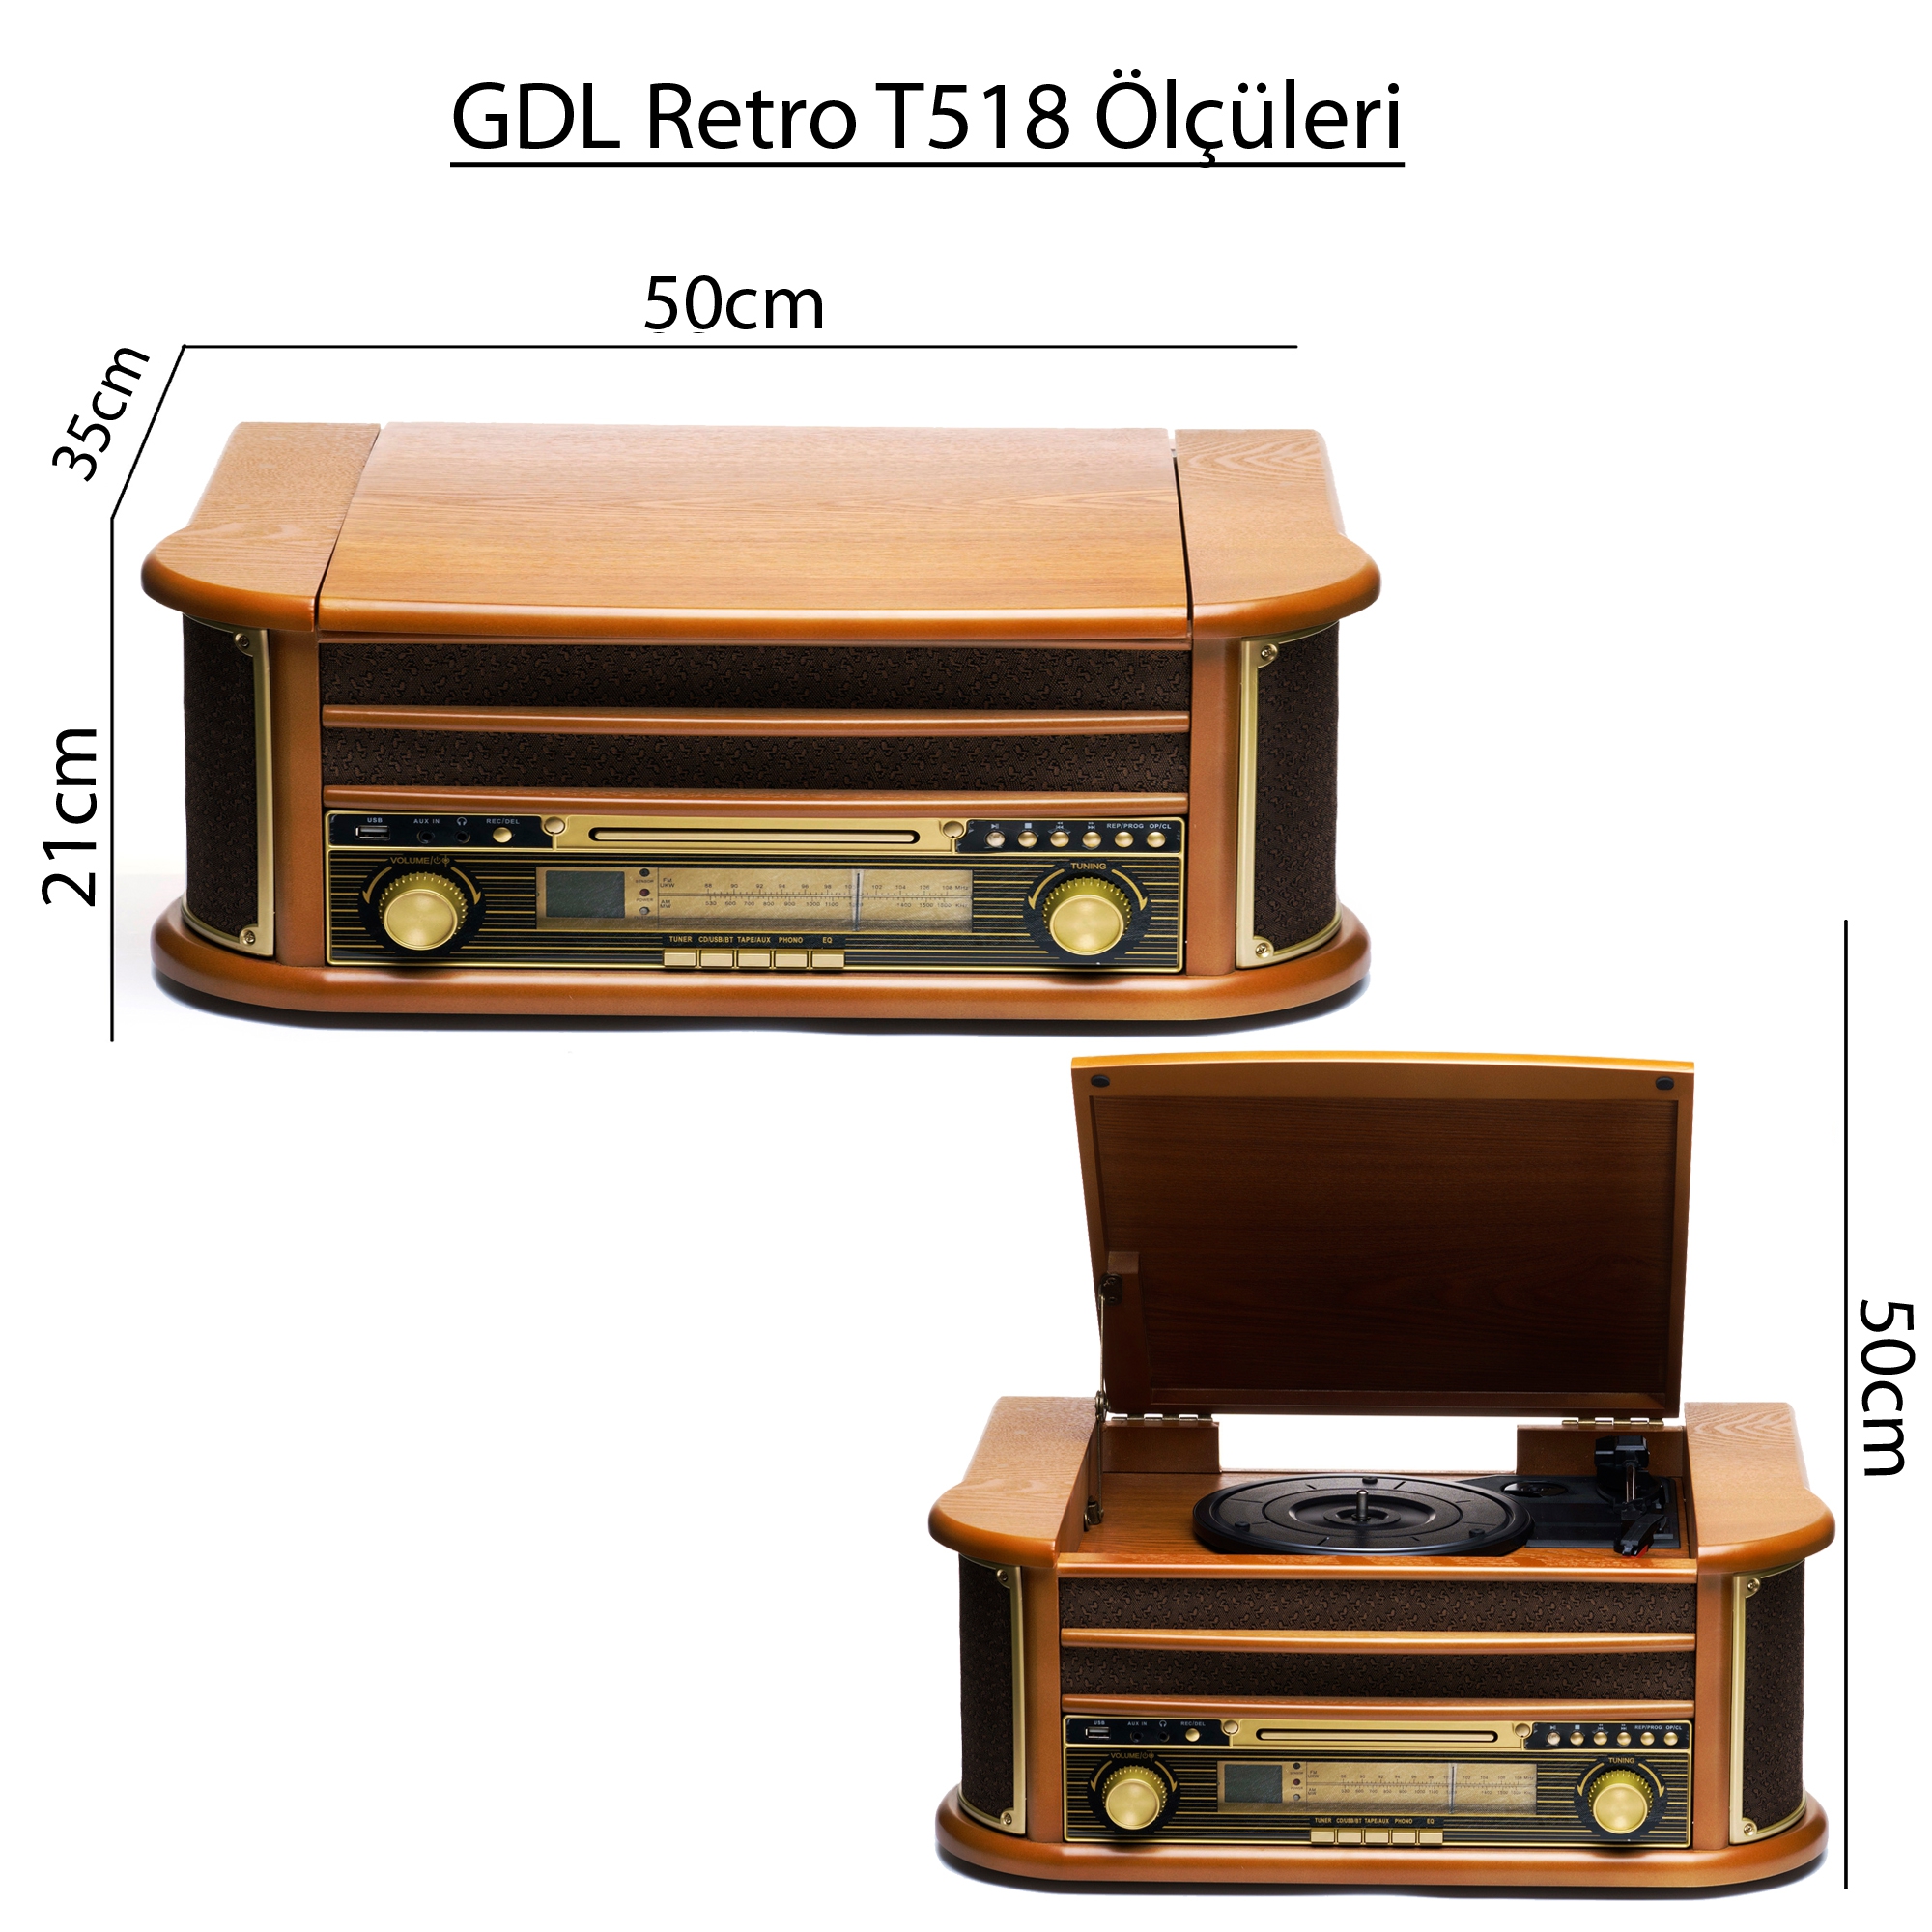 GDL Retro T518 Turntable, Radio, CD, Cassette, USB Player